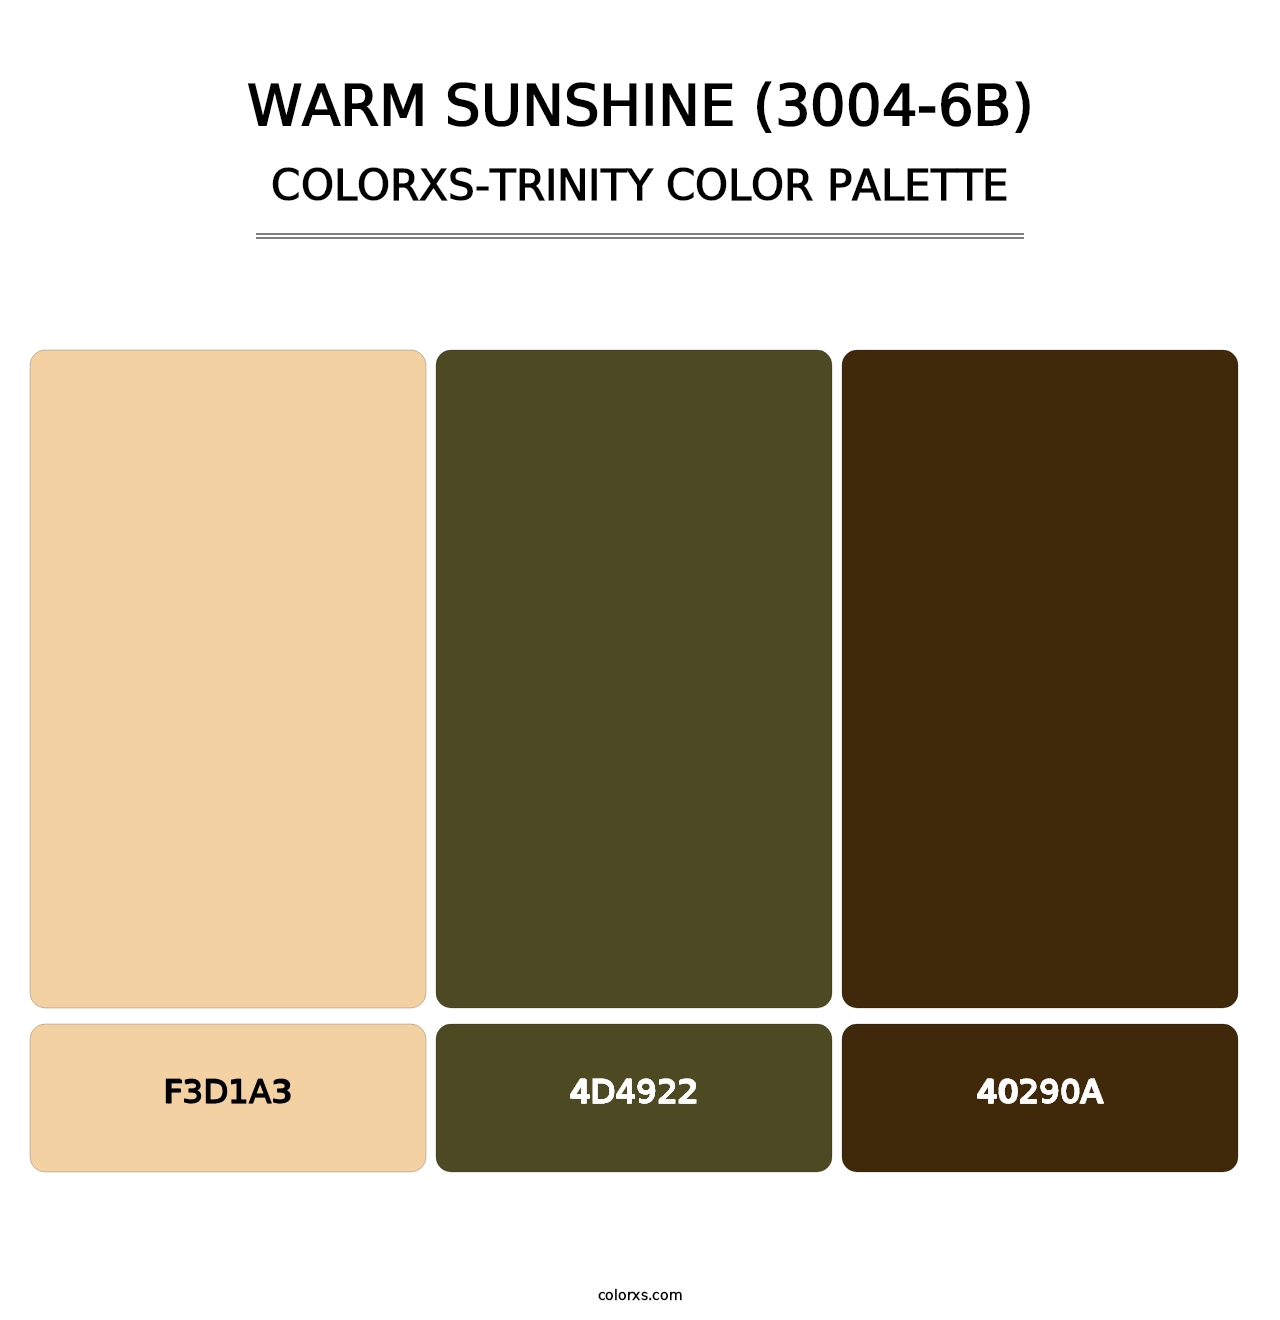 Warm Sunshine (3004-6B) - Colorxs Trinity Palette